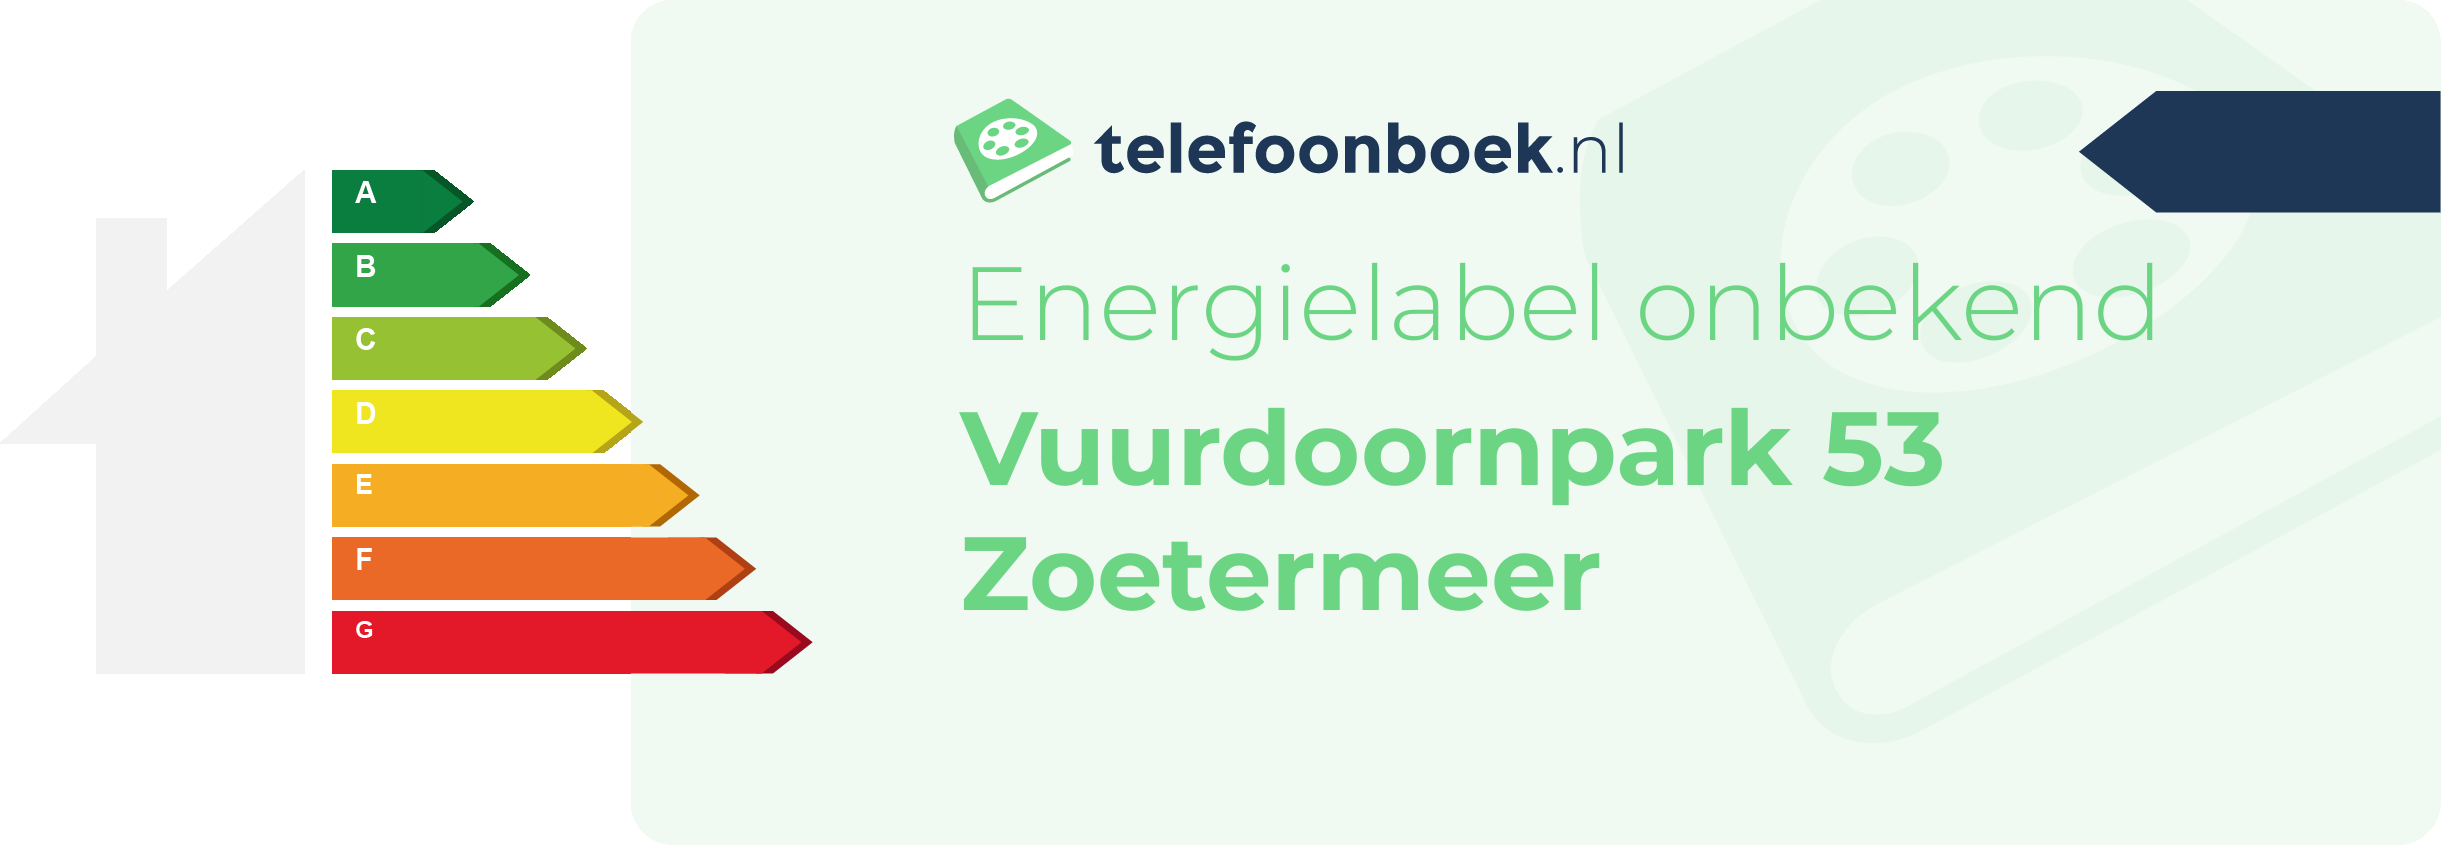 Energielabel Vuurdoornpark 53 Zoetermeer